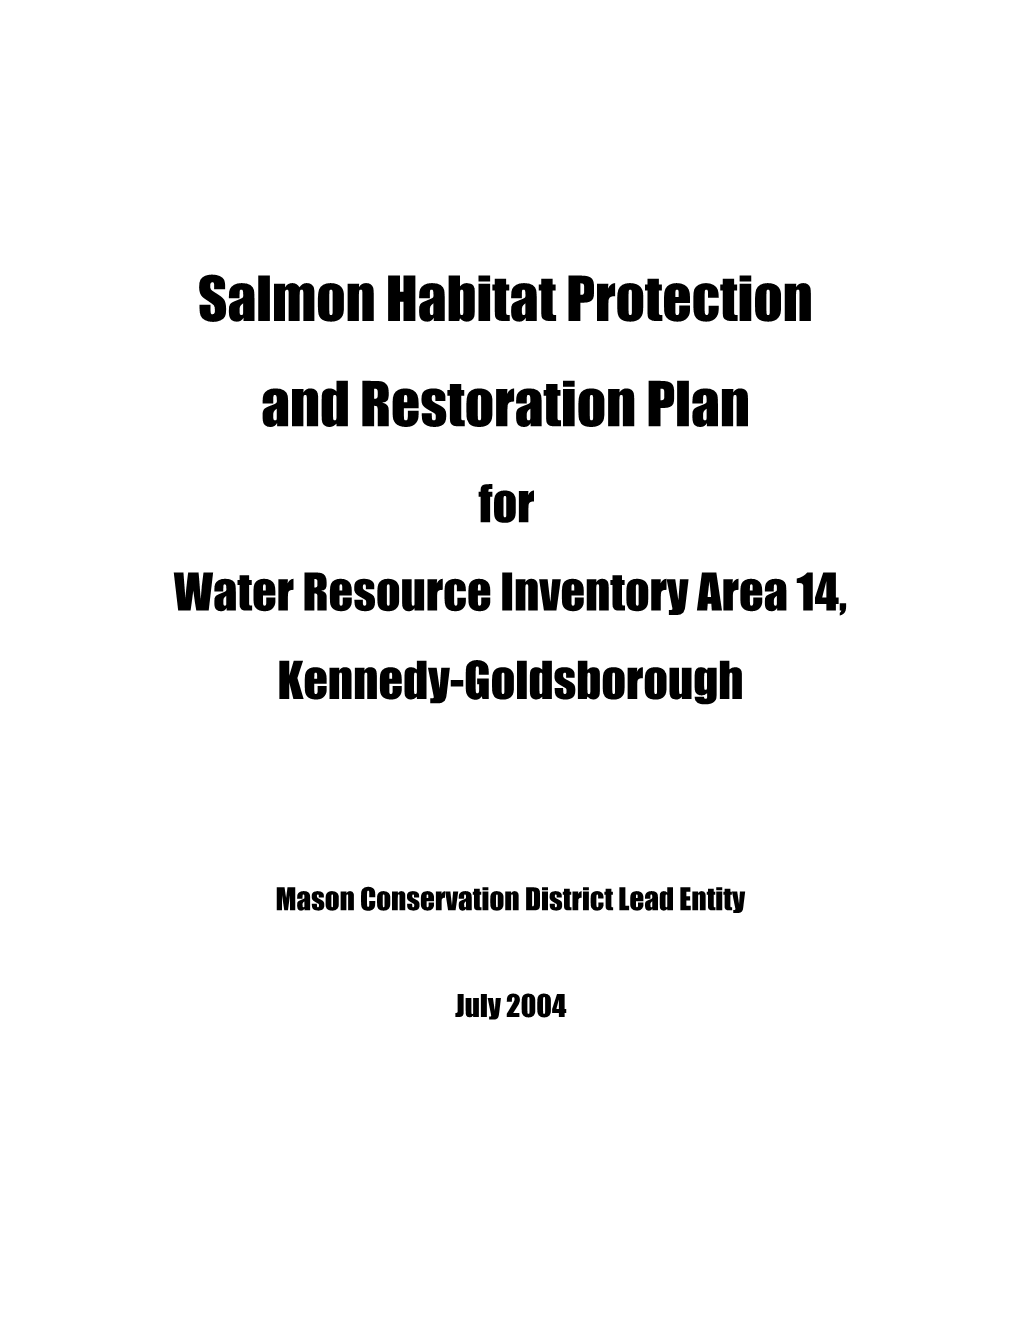 Water Resource Inventory Area 14, Kennedy-Goldsborough